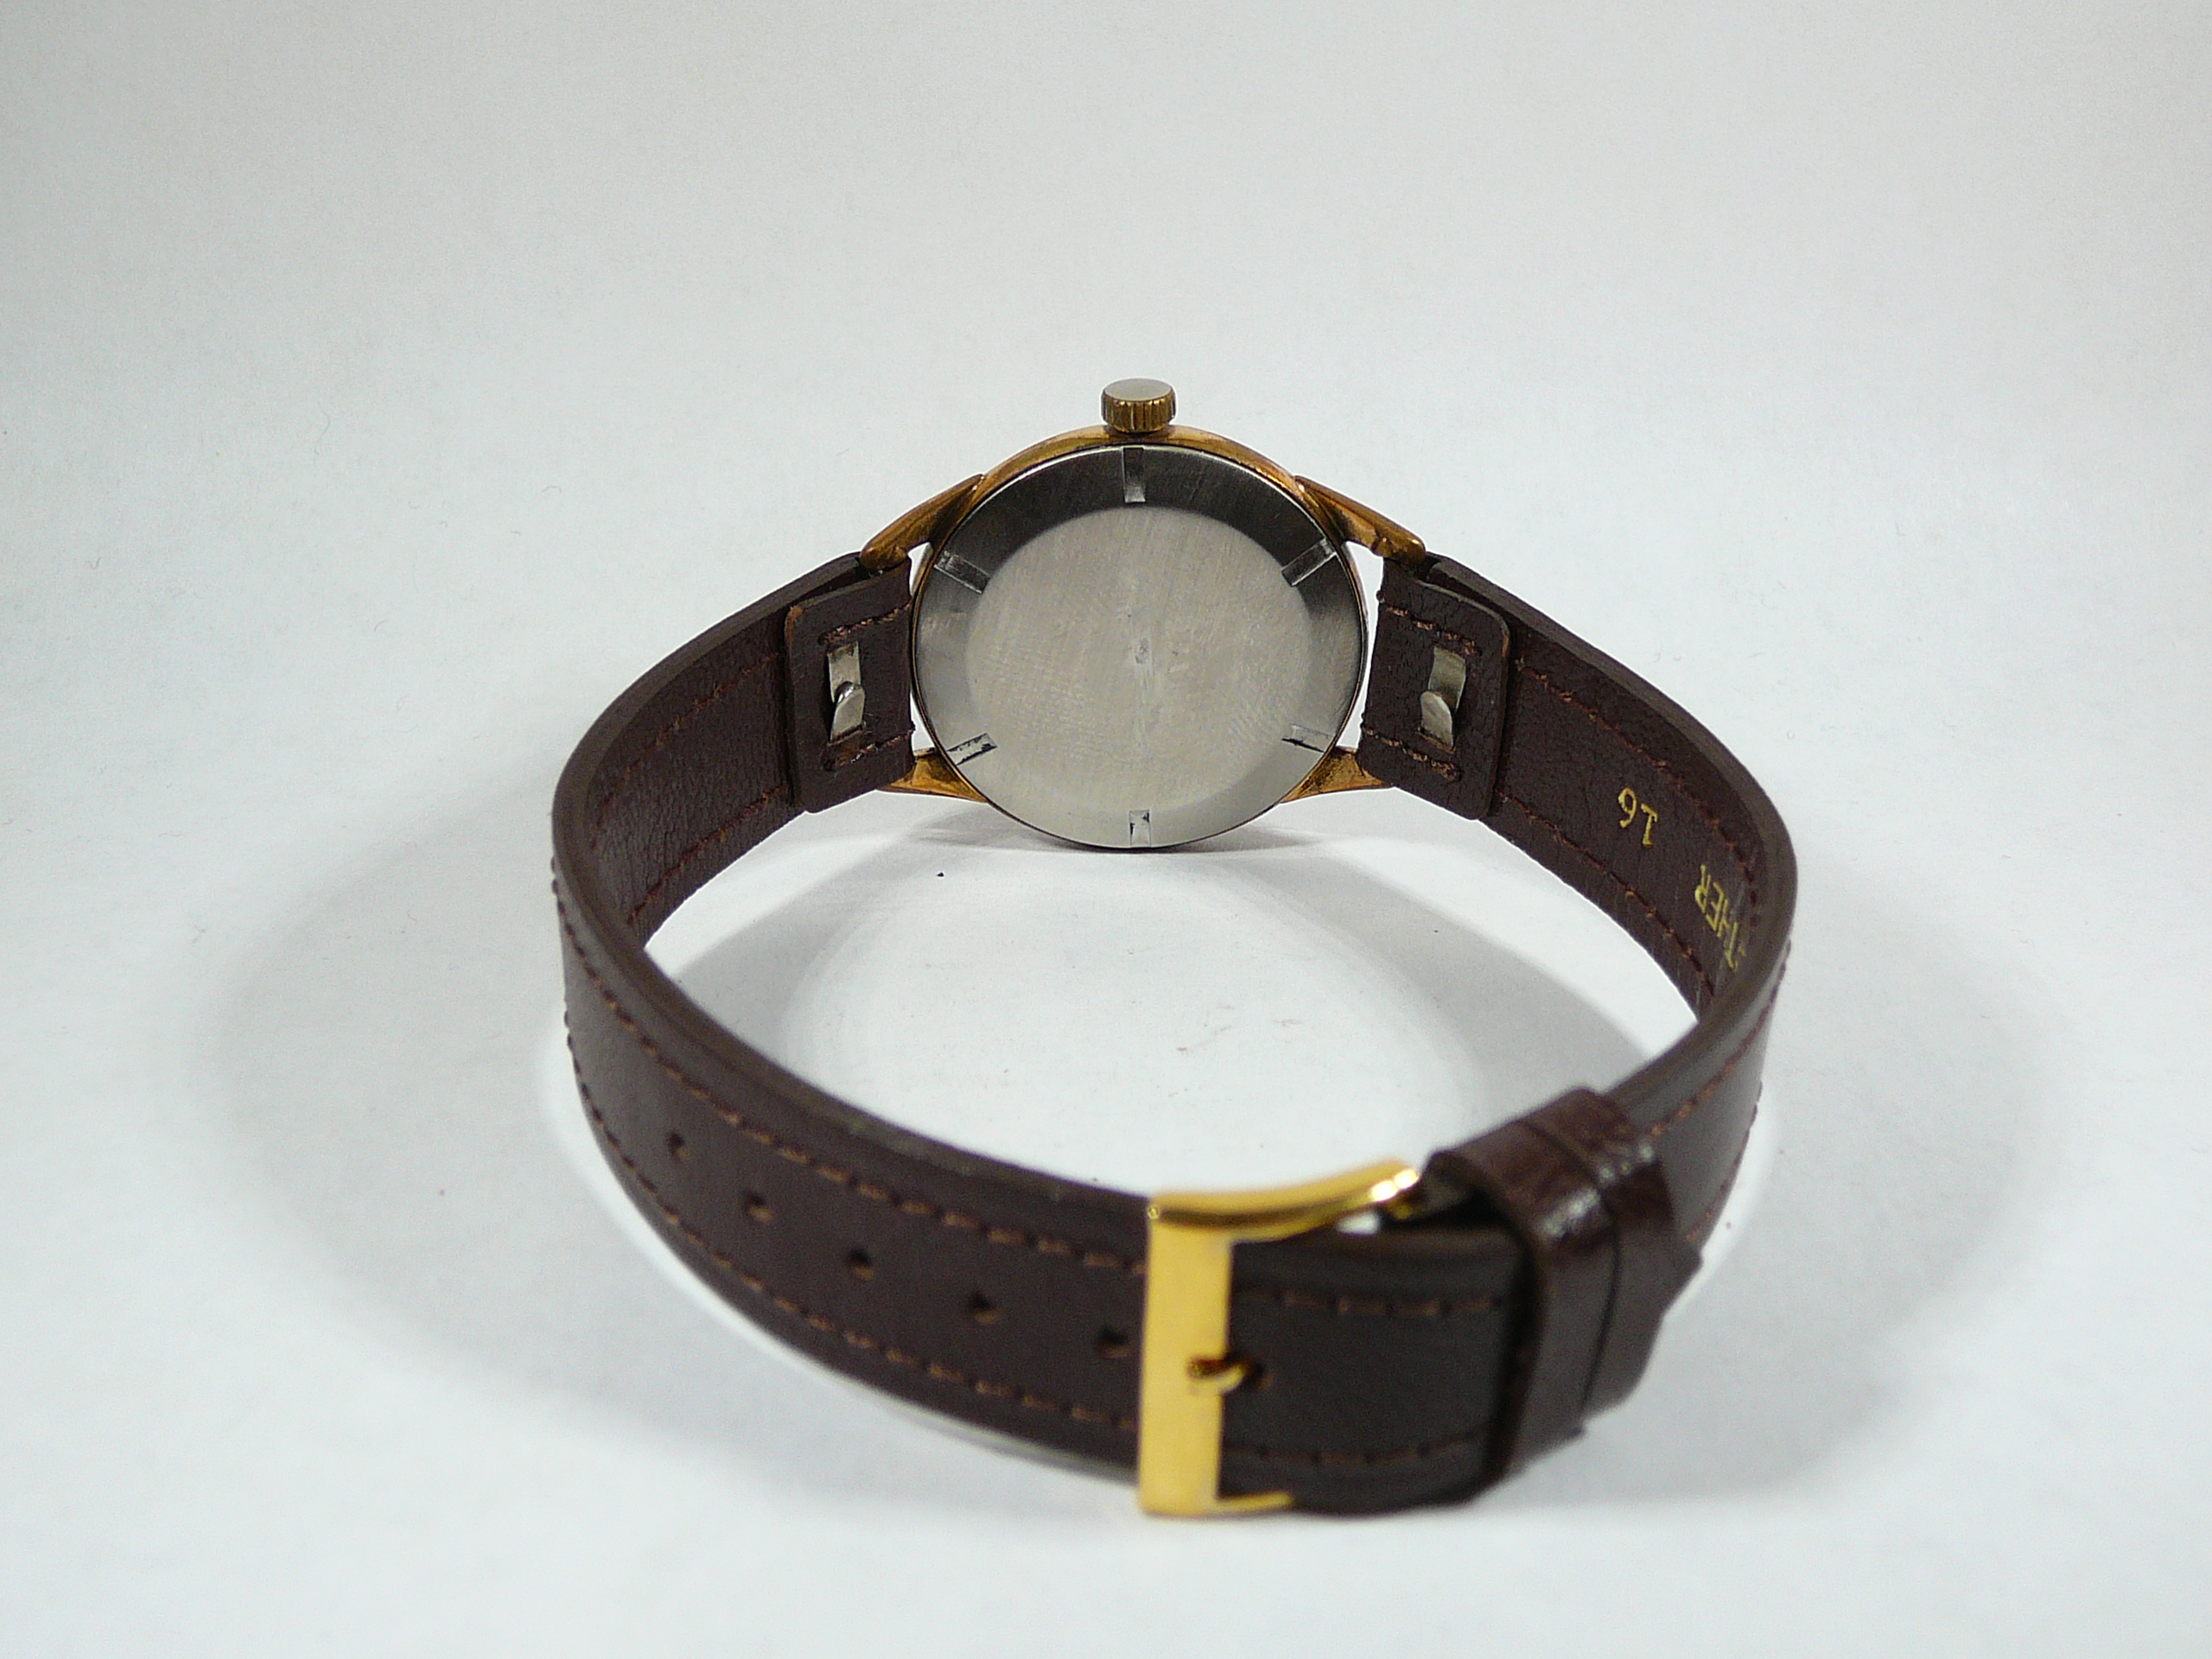 Gents Vintage Tudor Wrist Watch - Image 3 of 3